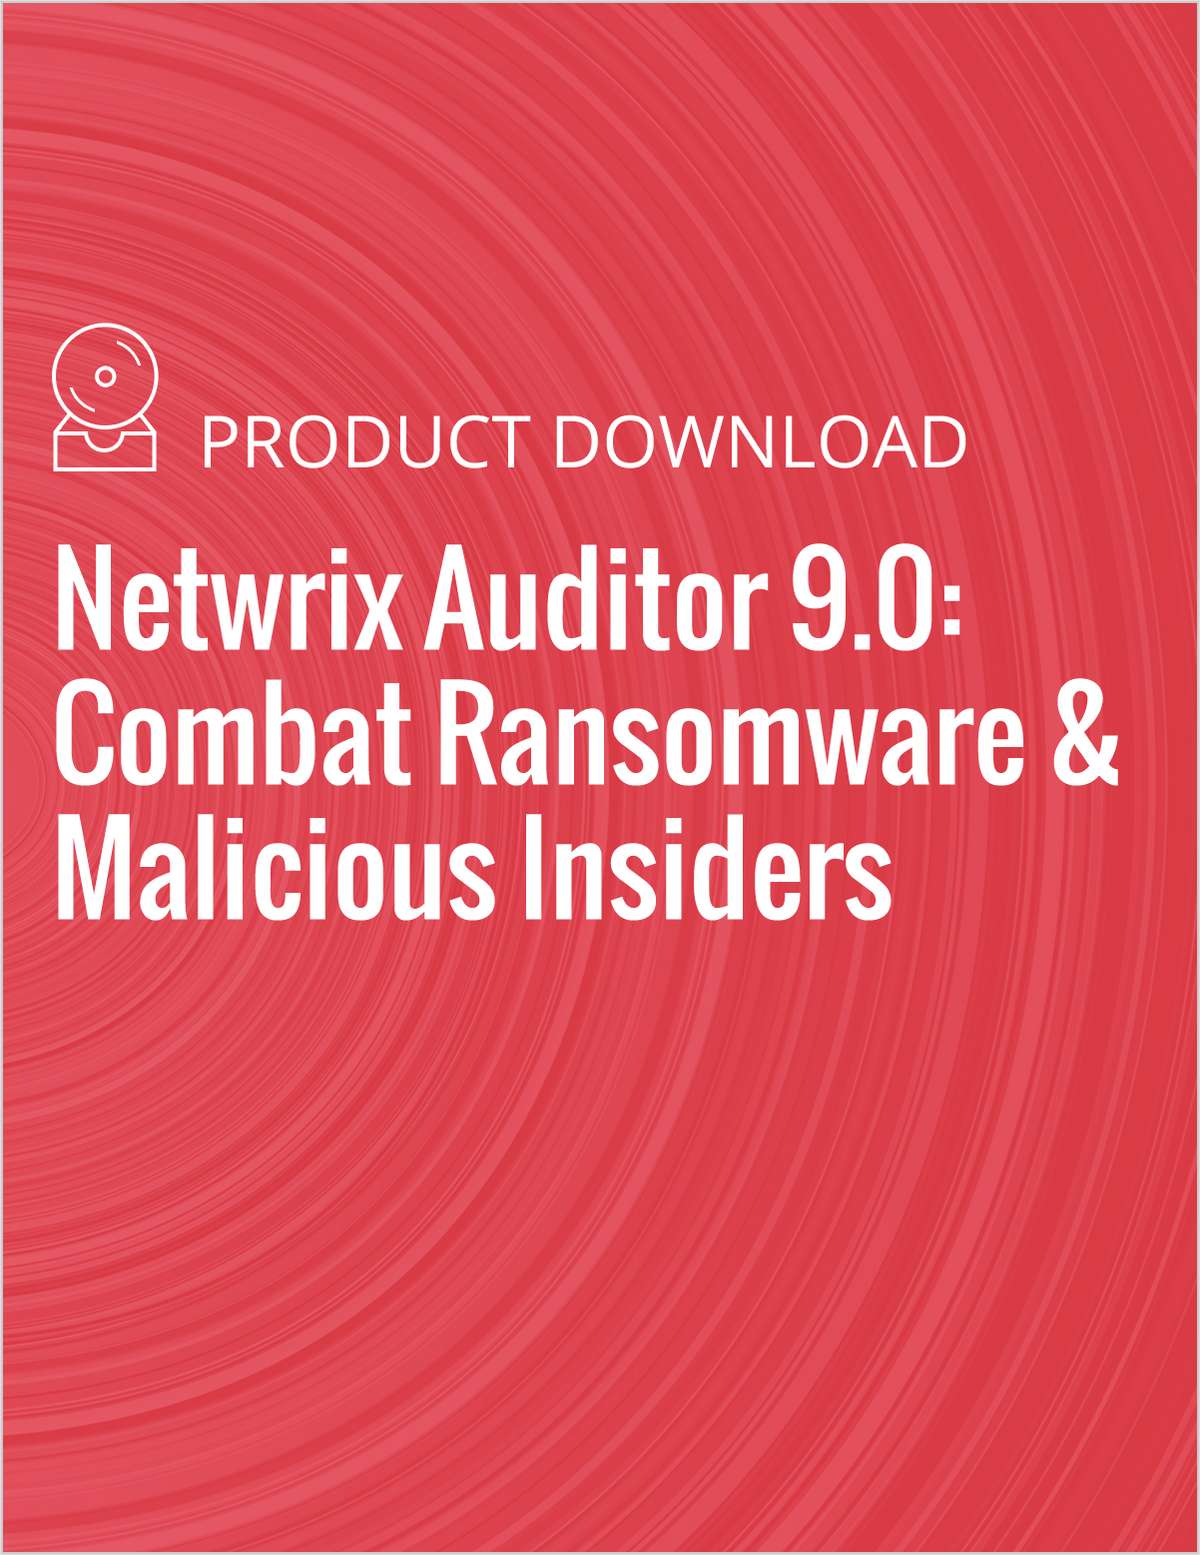 Netwrix Auditor 9.0: Combat Ransomware & Malicious Insiders